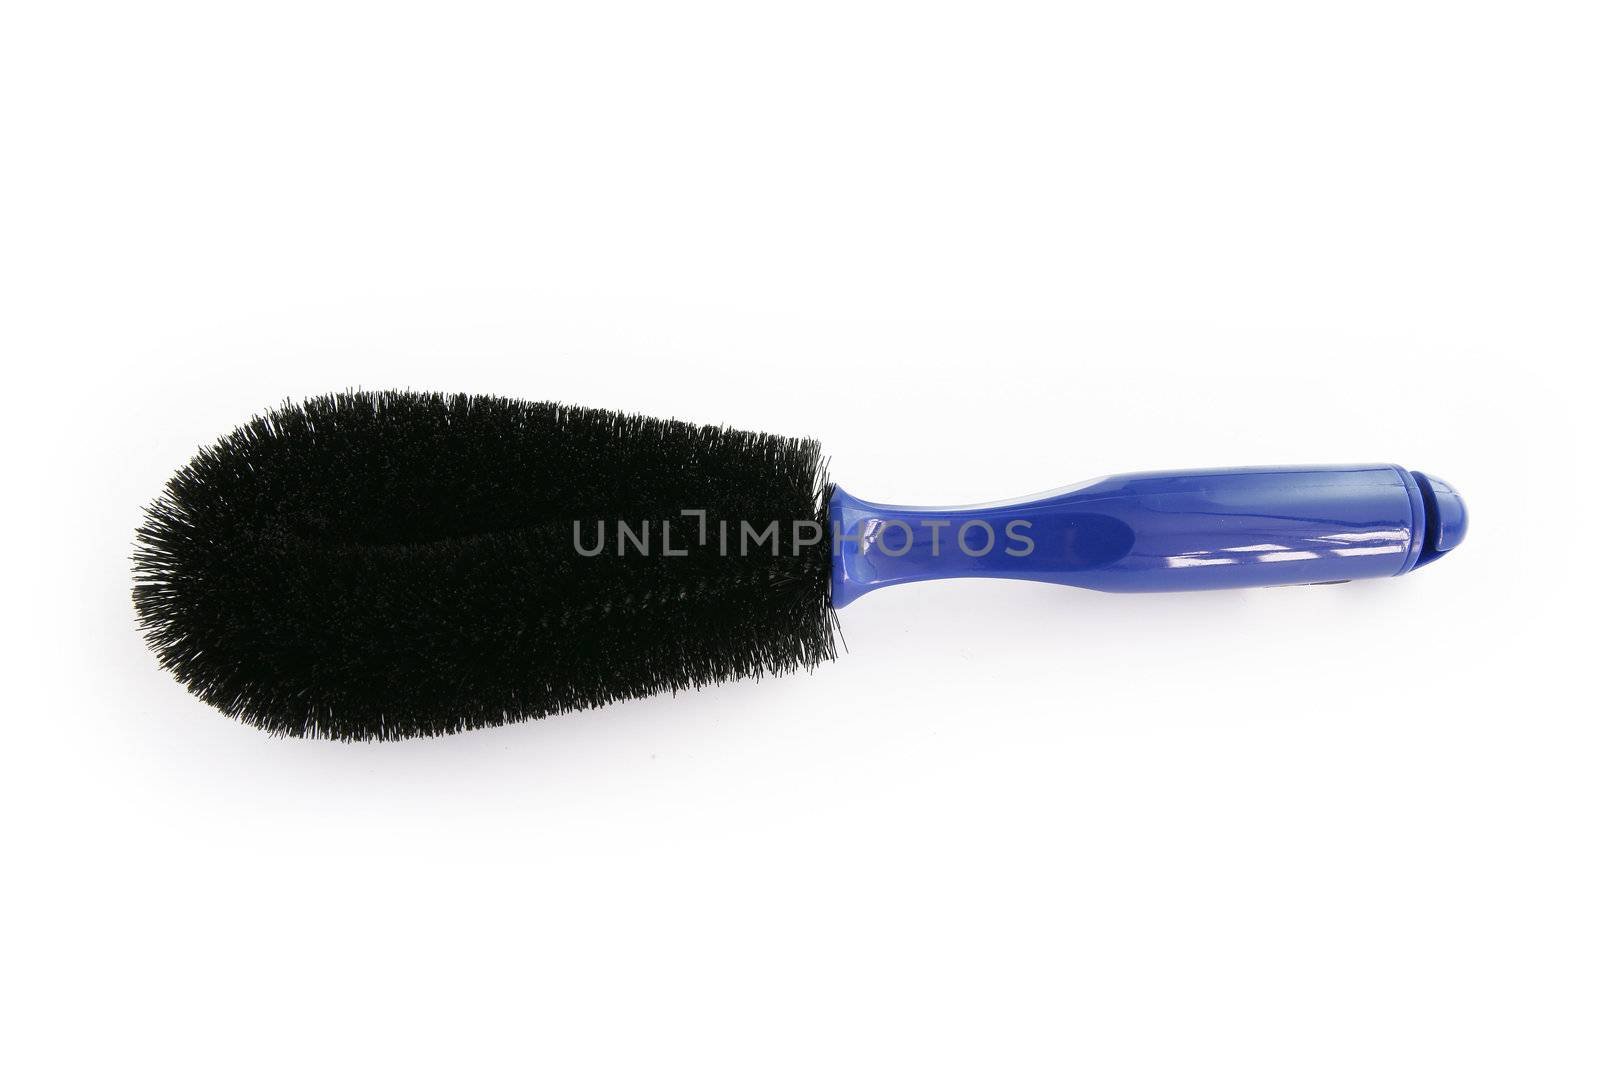 Blue hair brush by phovoir